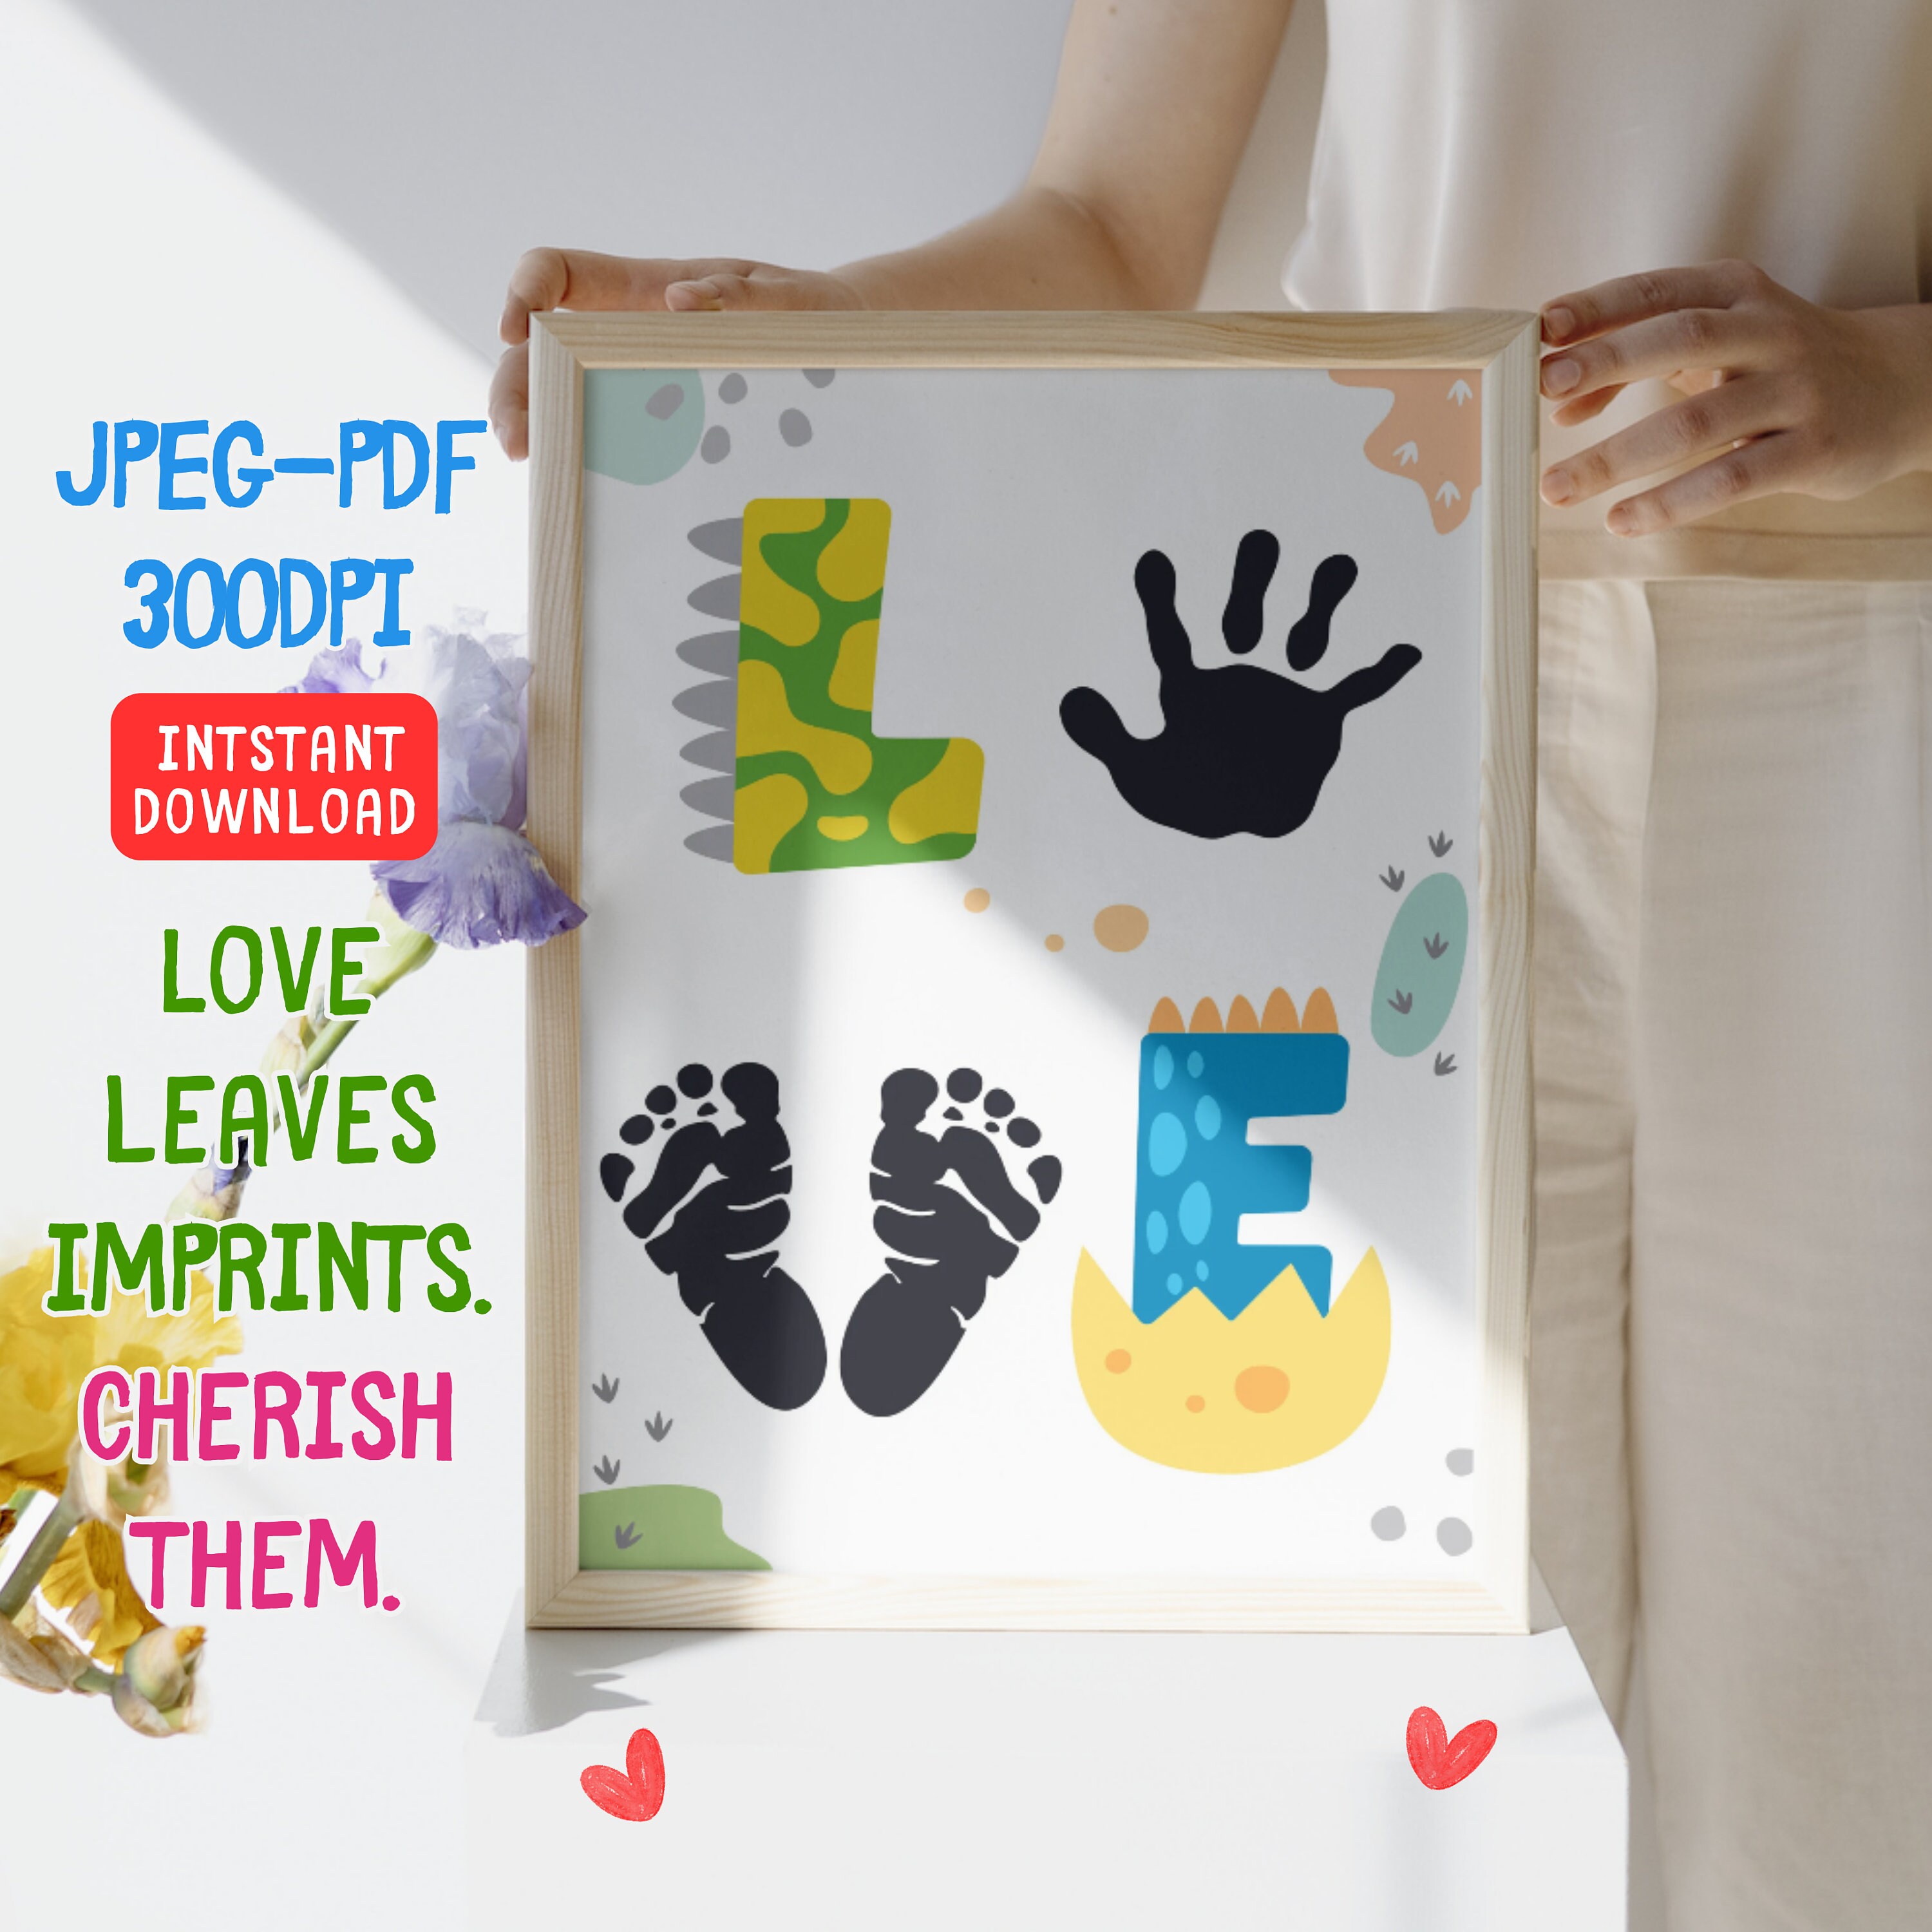 My Tiny Prints Newborn Baby Handprint and Footprint Photo Frame